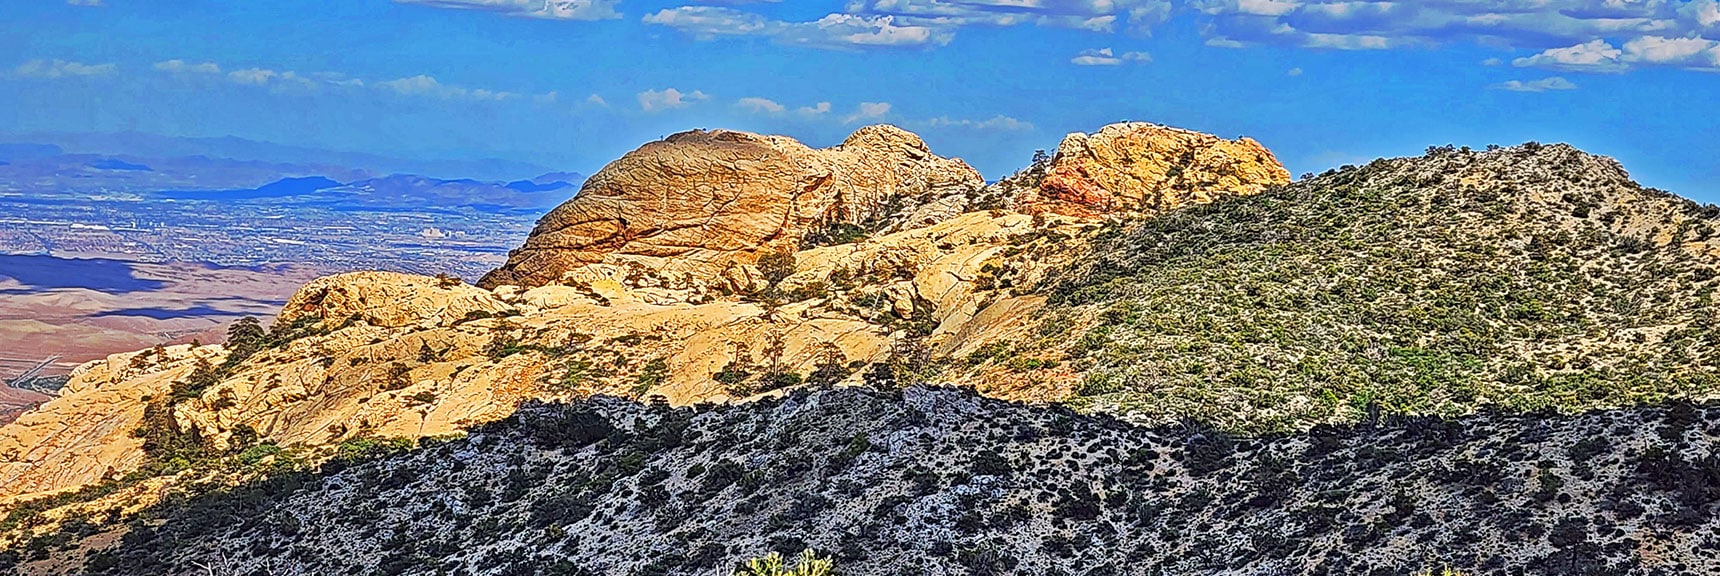 Monument Peak (Left), Hidden Peak (Right) in View as Descent Begins to Little Zion | Little Zion | Rainbow Mountain Wilderness, Nevada